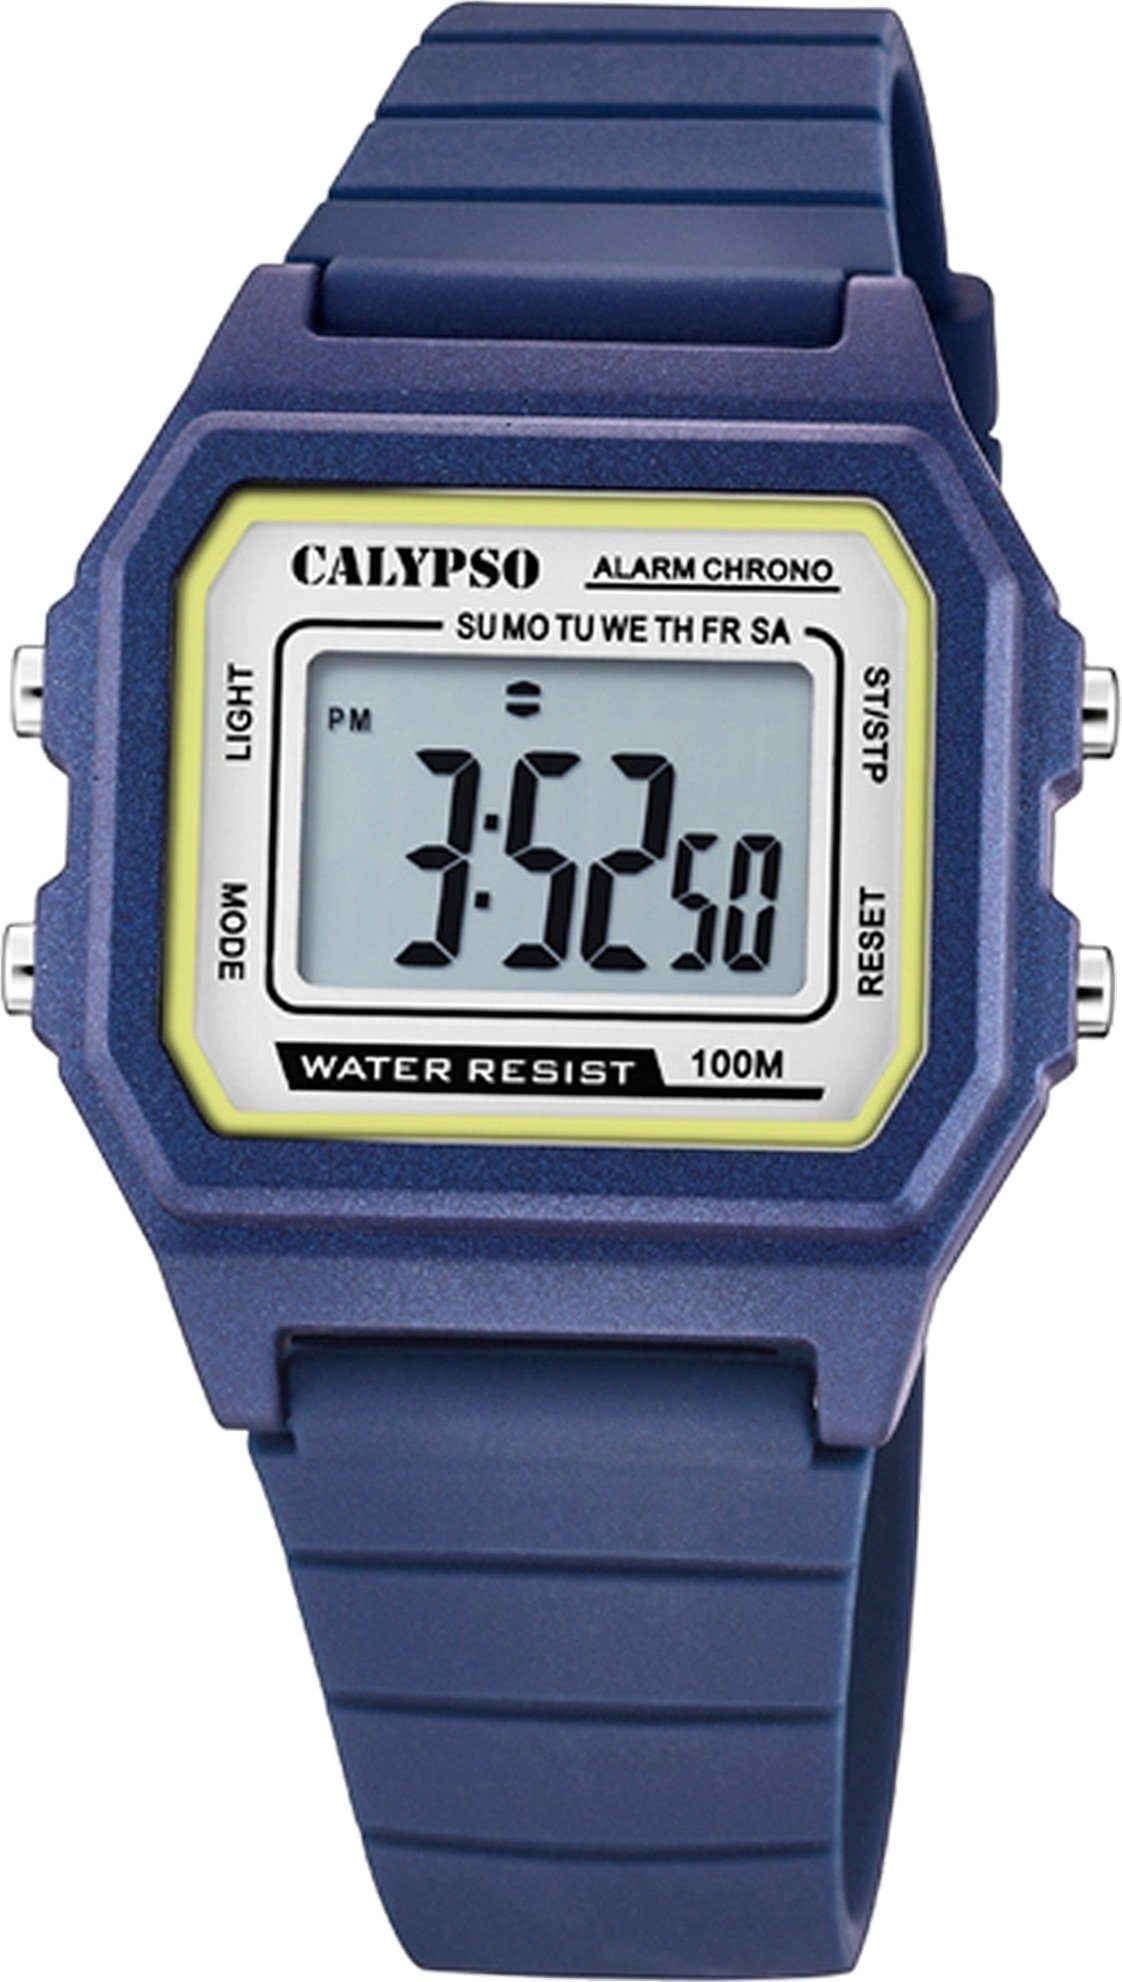 CALYPSO WATCHES Digitaluhr (ca. Sport-Style K5805/3, Uhr Kunststoffarmband, Herrenuhr mittel Digital eckig, Calypso Herren 37mm)